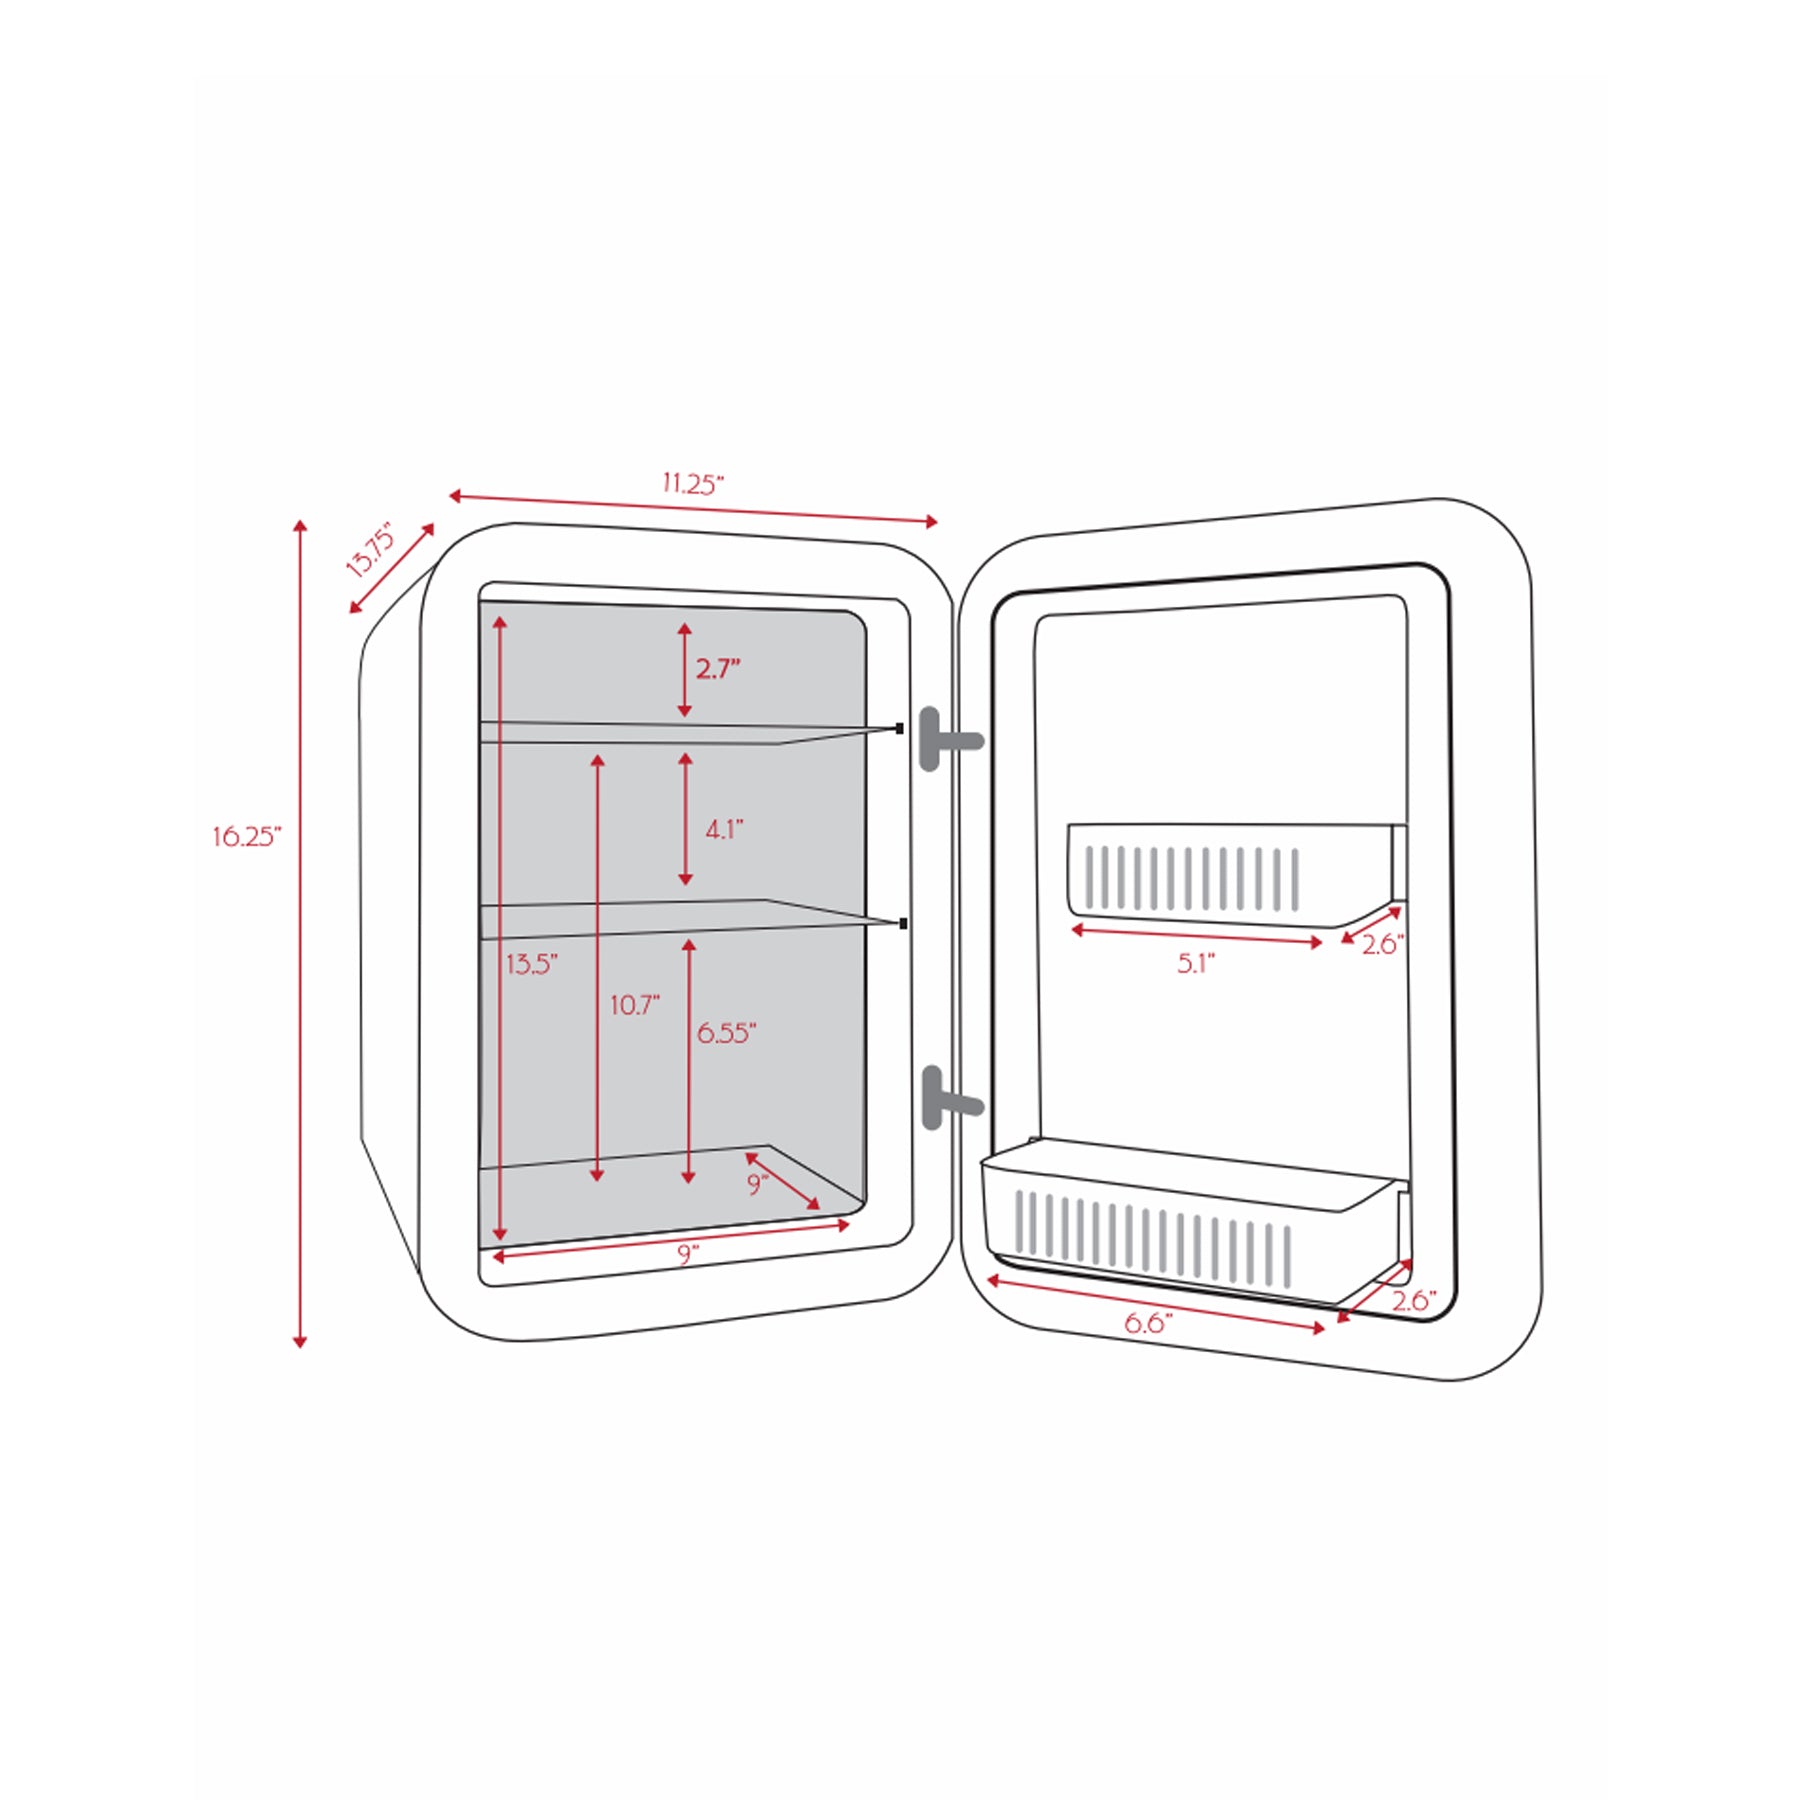 Cooluli 20L Mini Fridge For Bedroom - Car, Office Desk & College Dorm Room  - Glass Front & Digital Temperature Control - Small 12v Refrigerator for  Food, Drinks, Skincare, Beauty & Breast